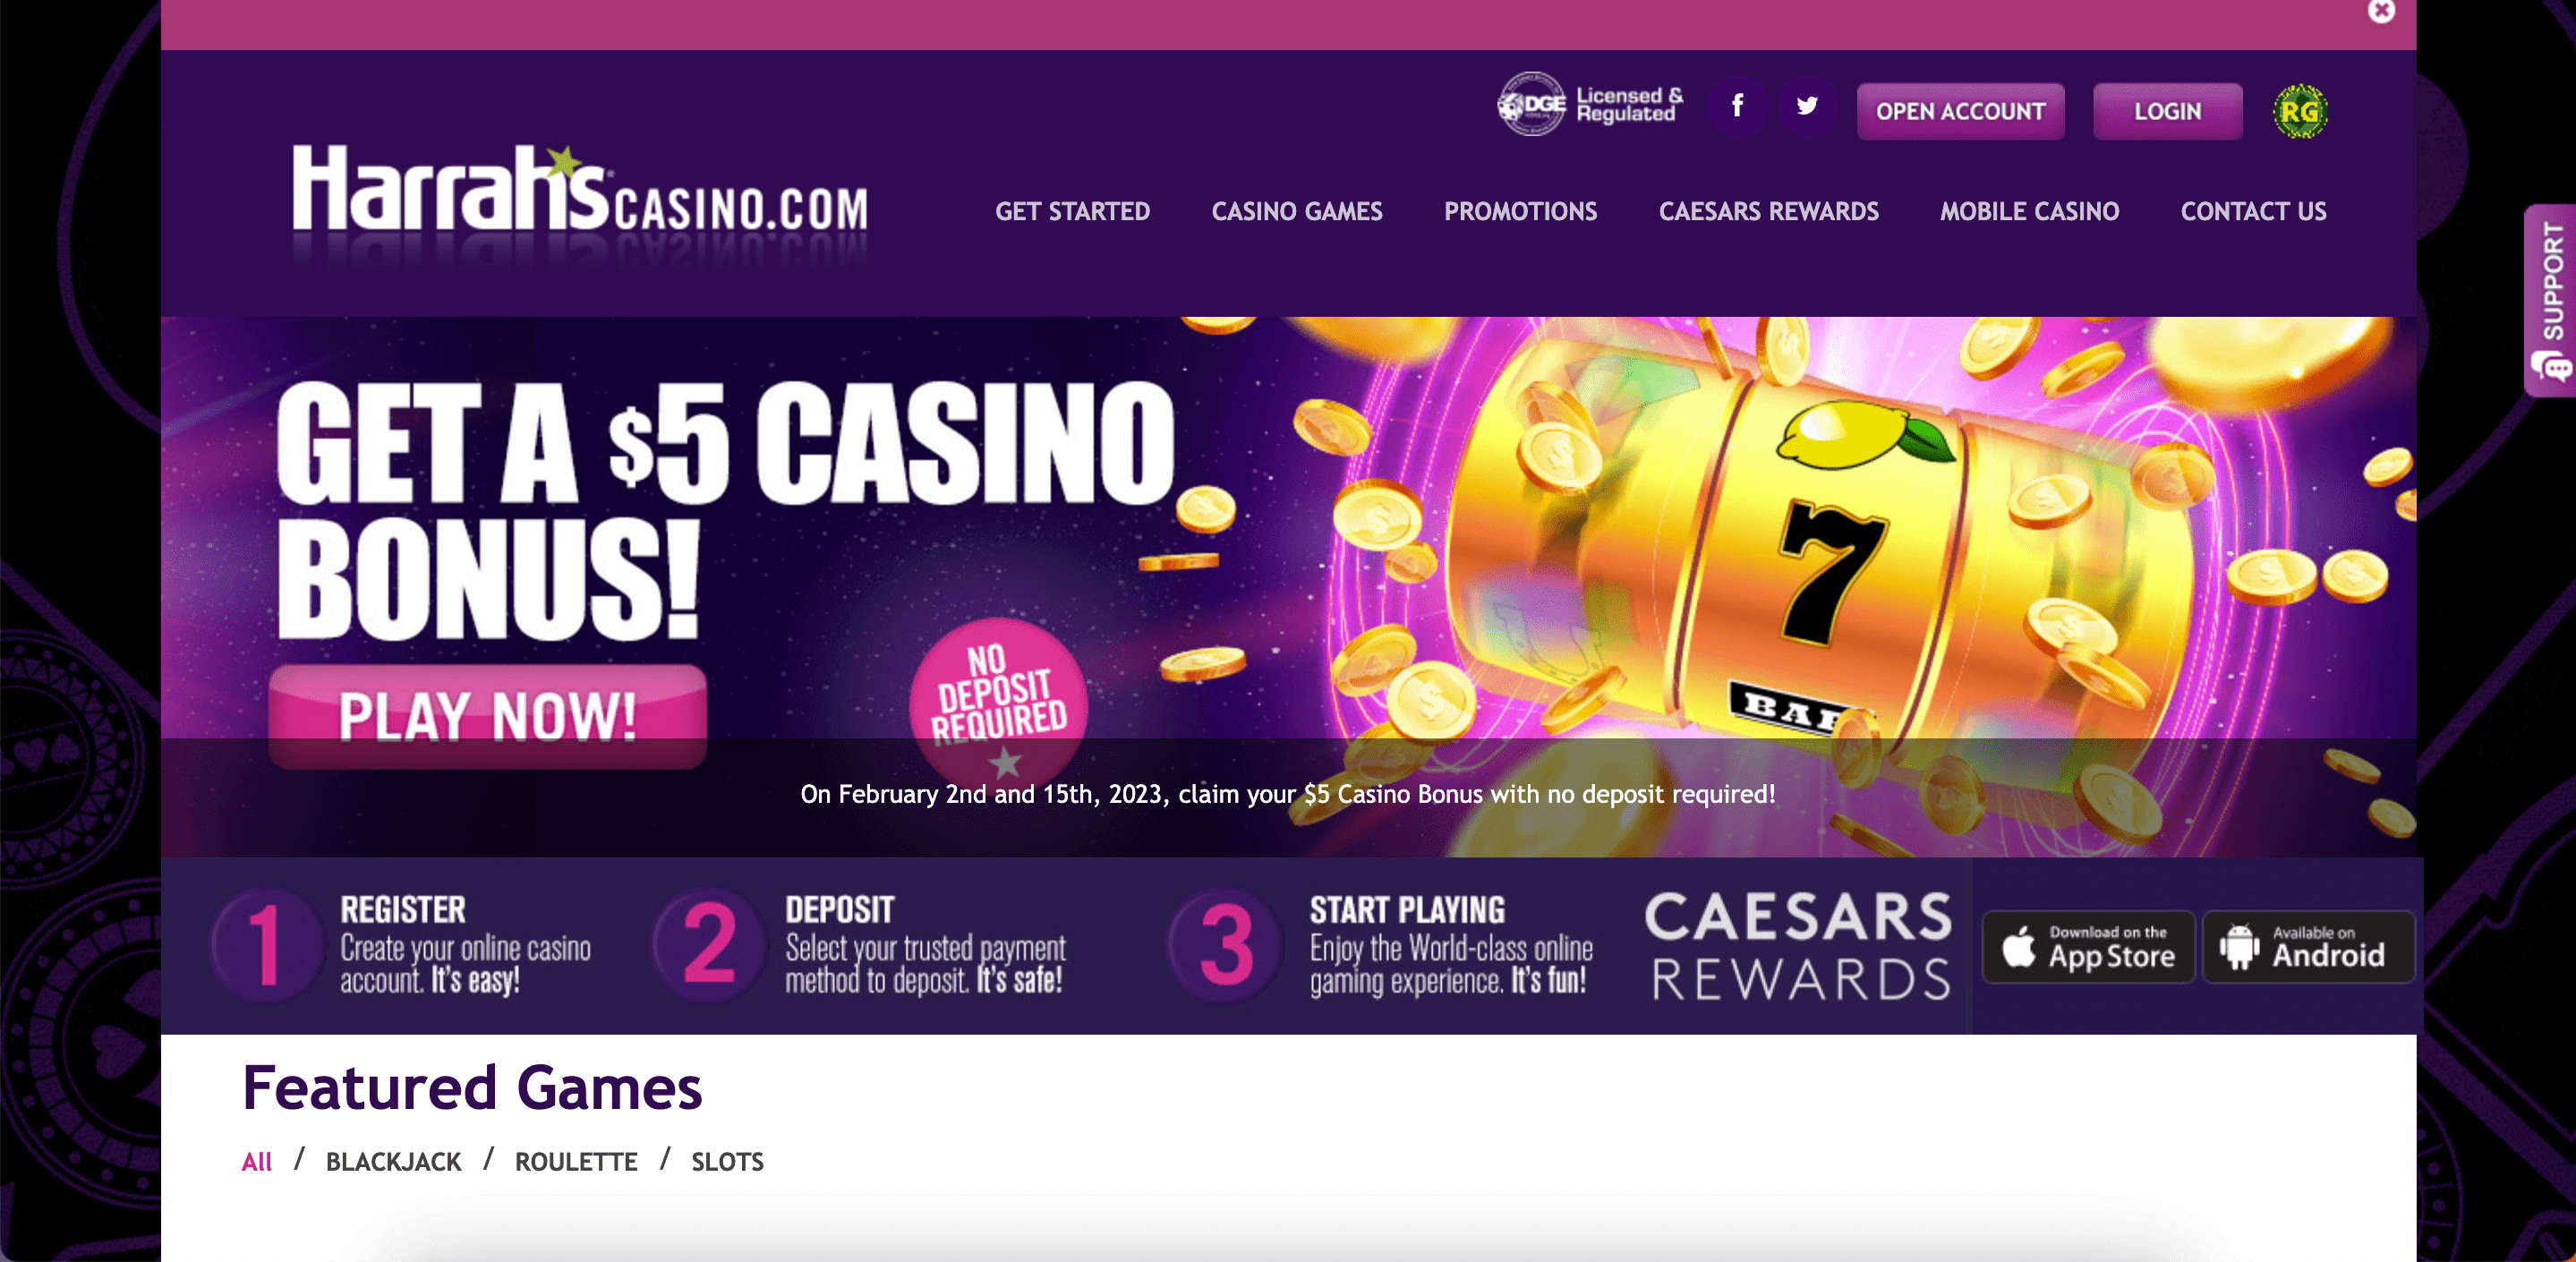 Harrah's Casino NJ Home Page